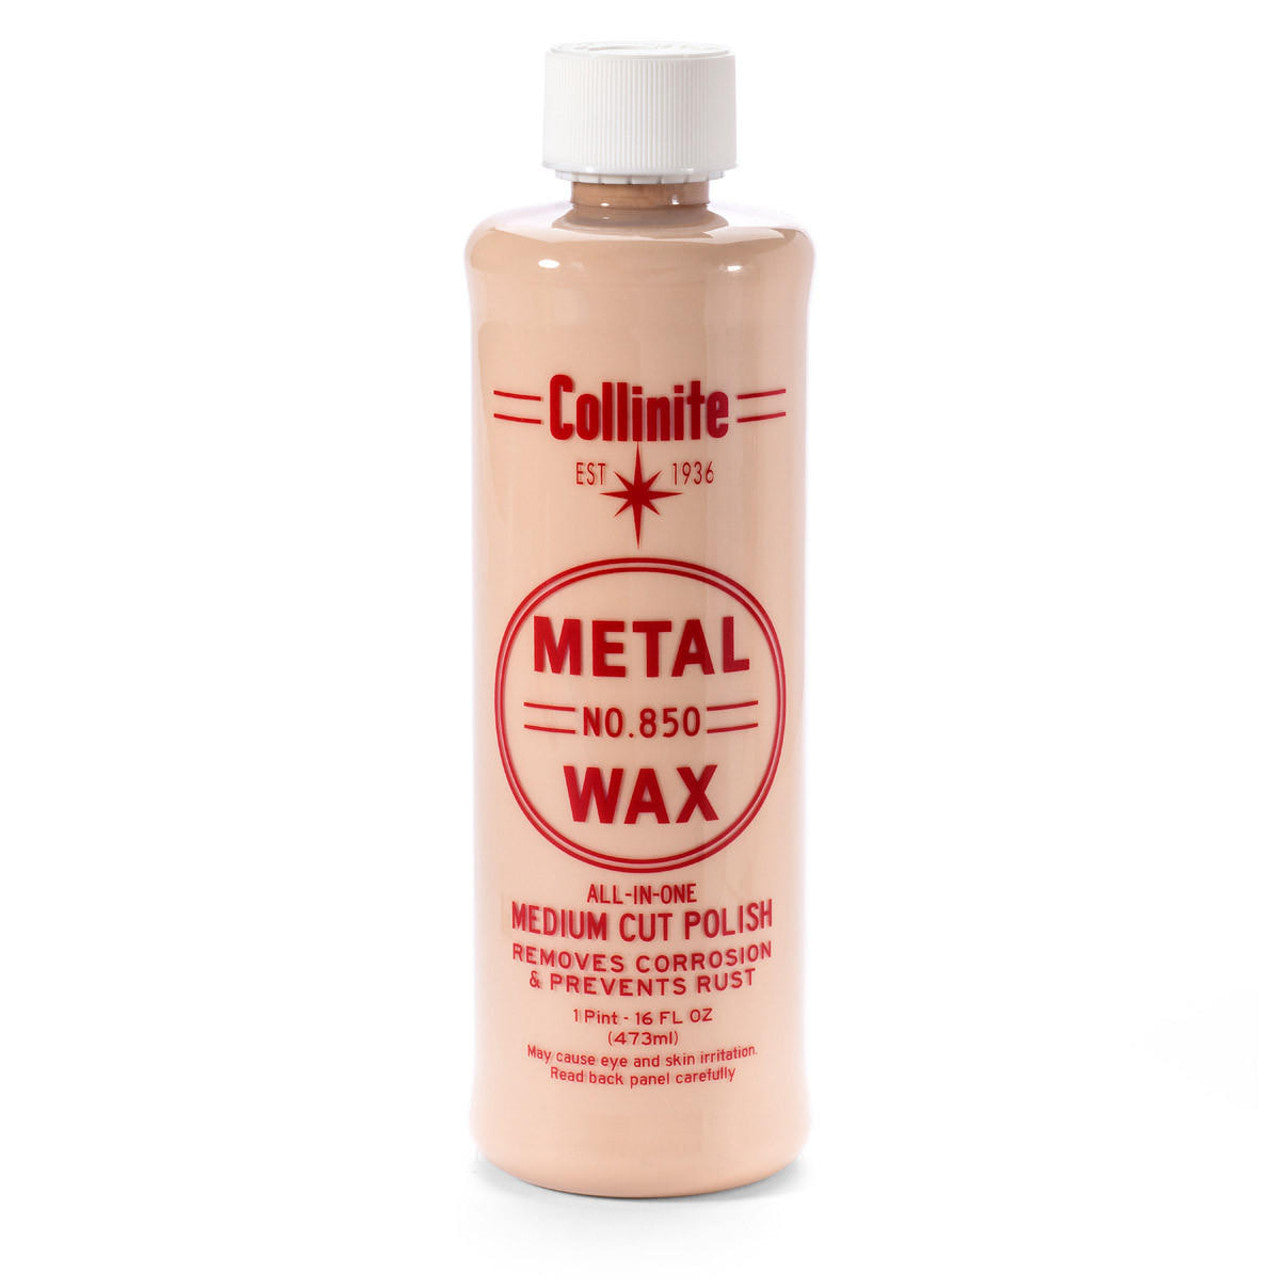 Collinite Metal Wax 850